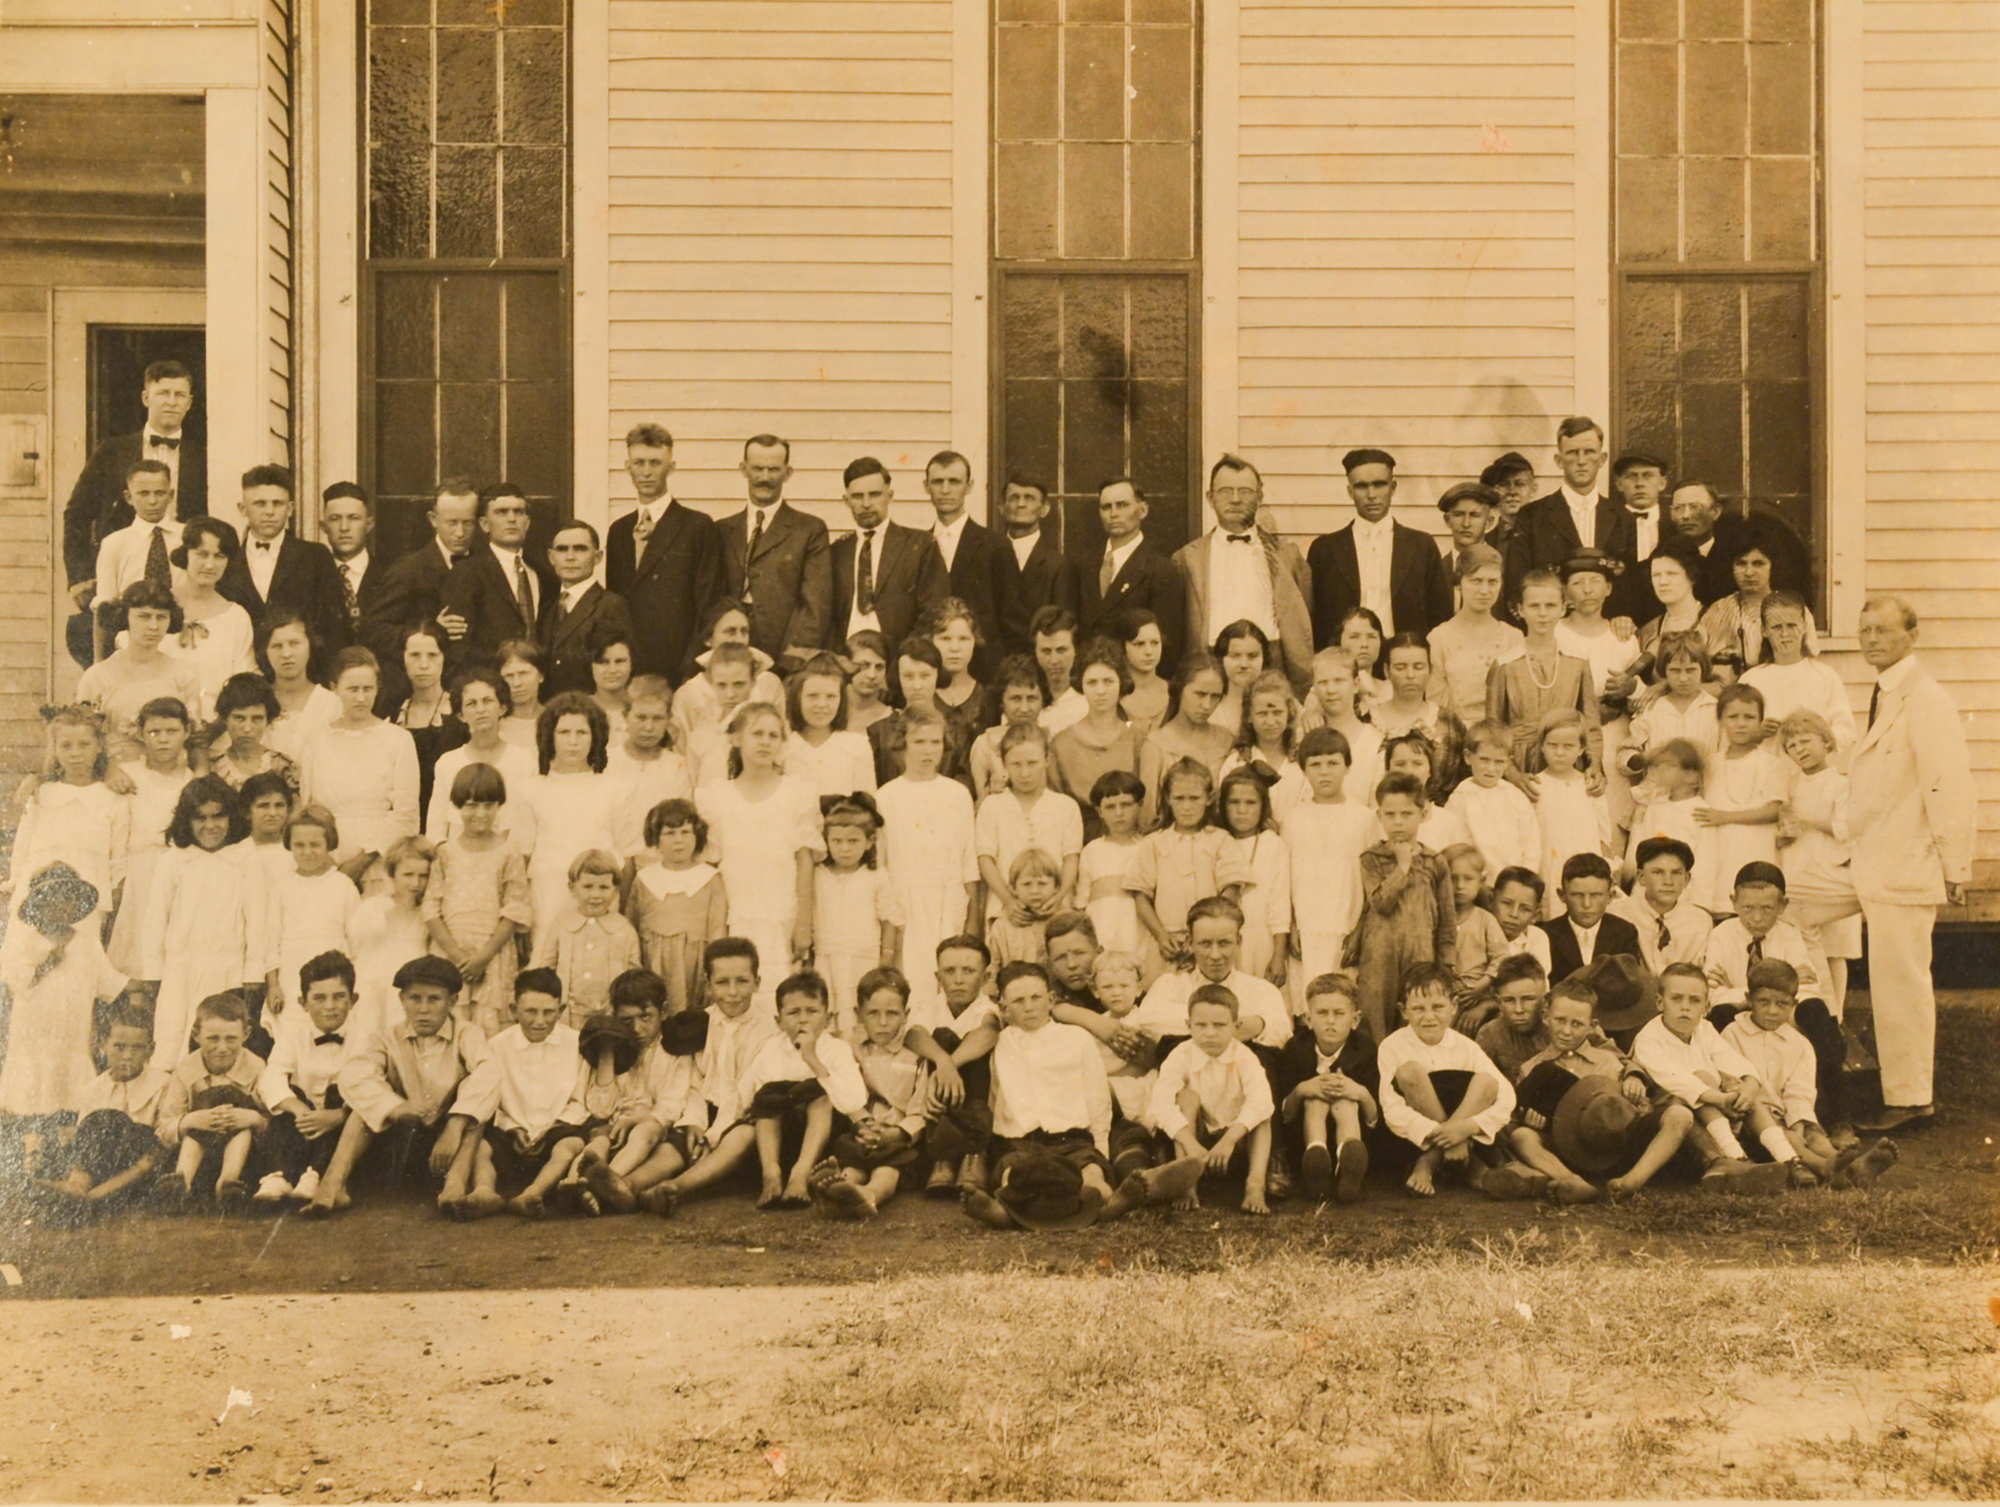 BAPTIST CHURCH IMAGE CA. 1920 - ENLARGEMENT